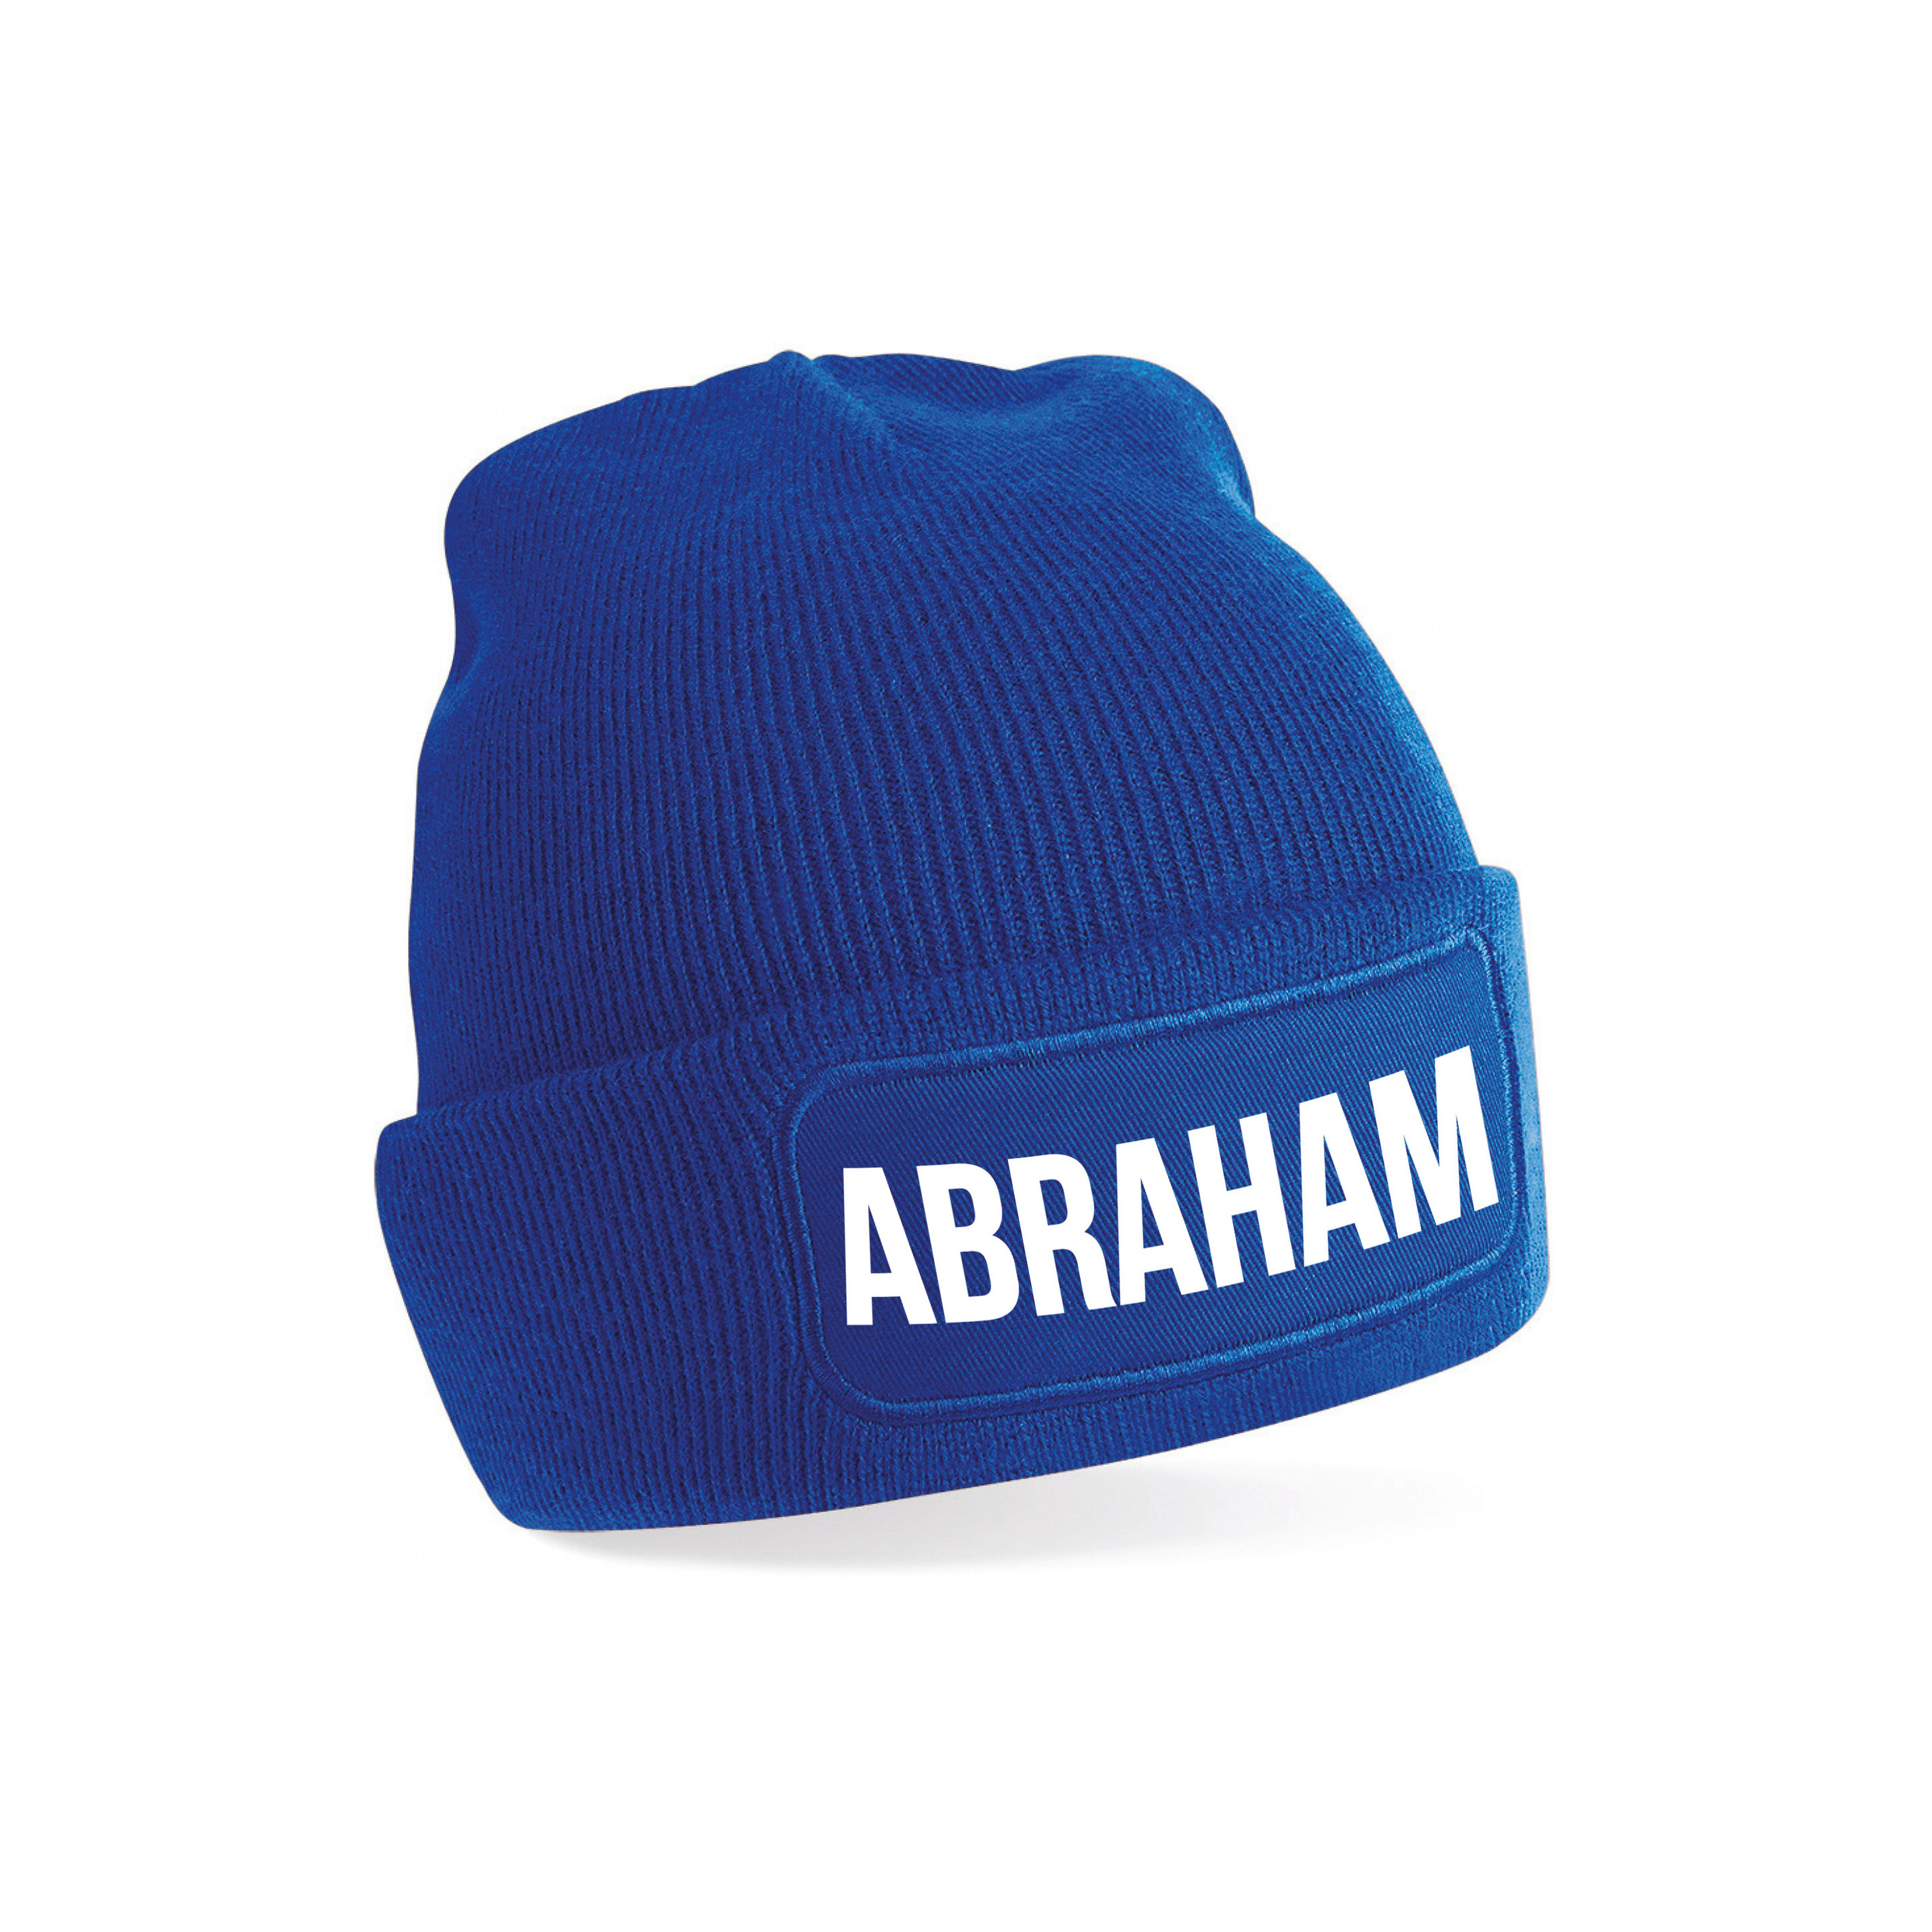 Abraham muts unisex one size Blauw